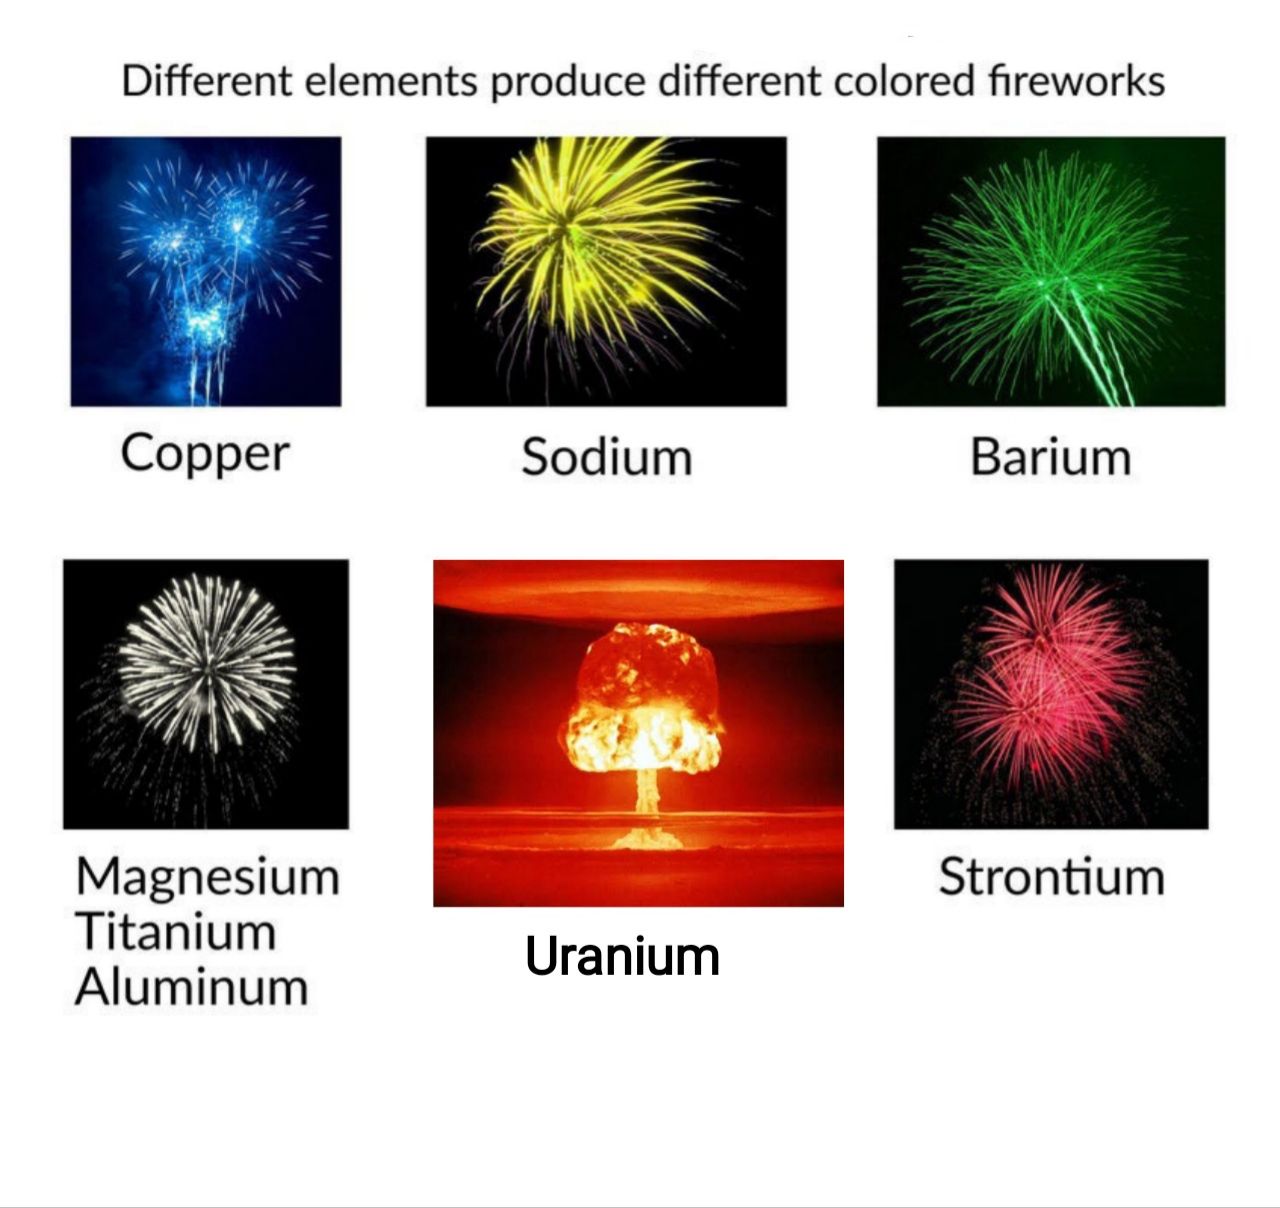 I love uranium fireworks